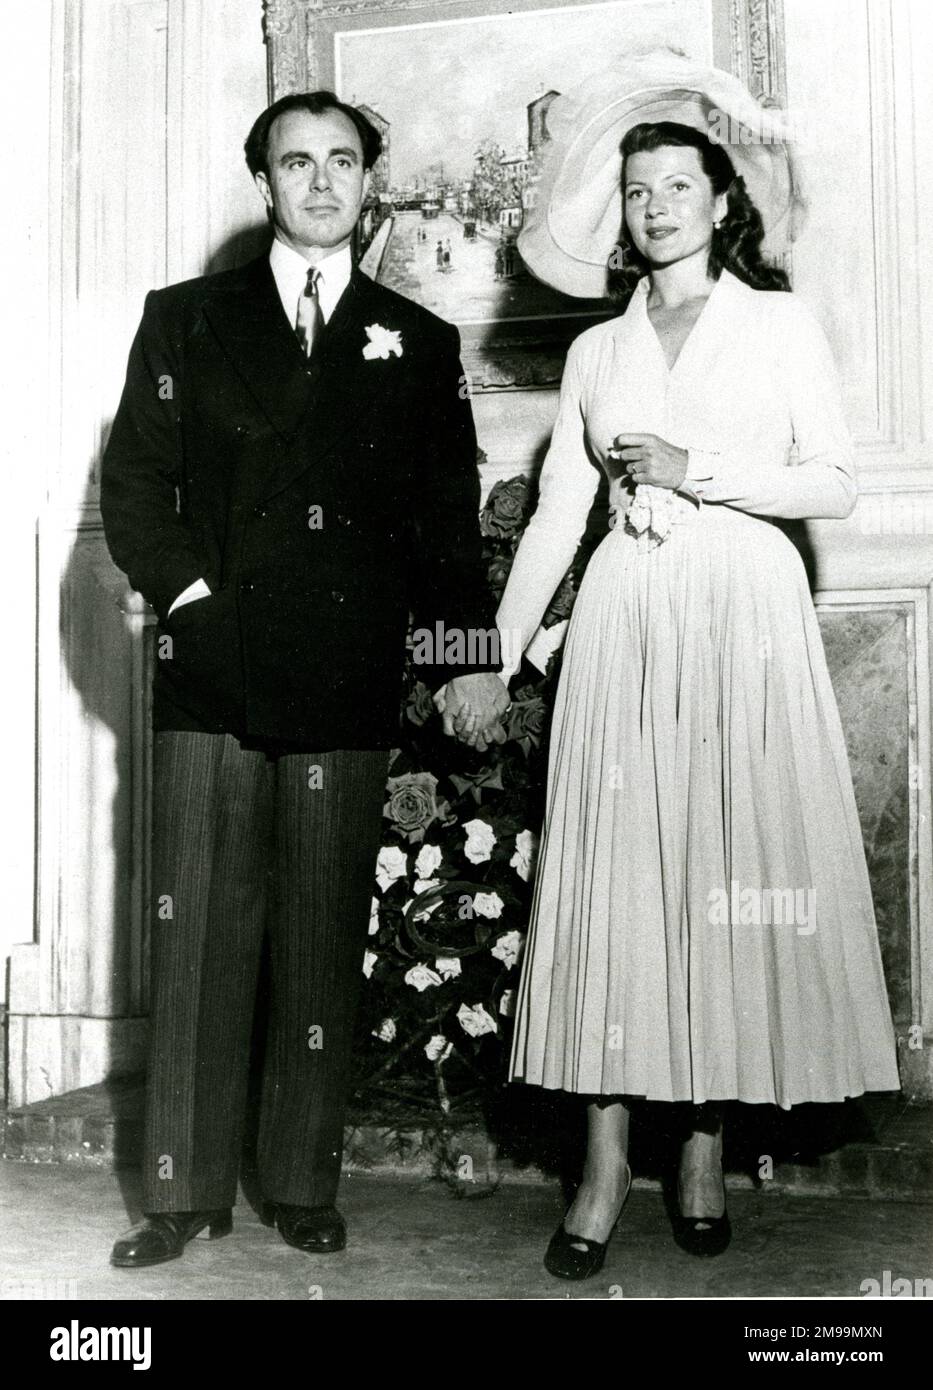 Prince Aly Khan (Prince Ali Salman Aga Khan) and Rita Hayworth, American actress and dancer, after their wedding in May 1949. Stock Photo